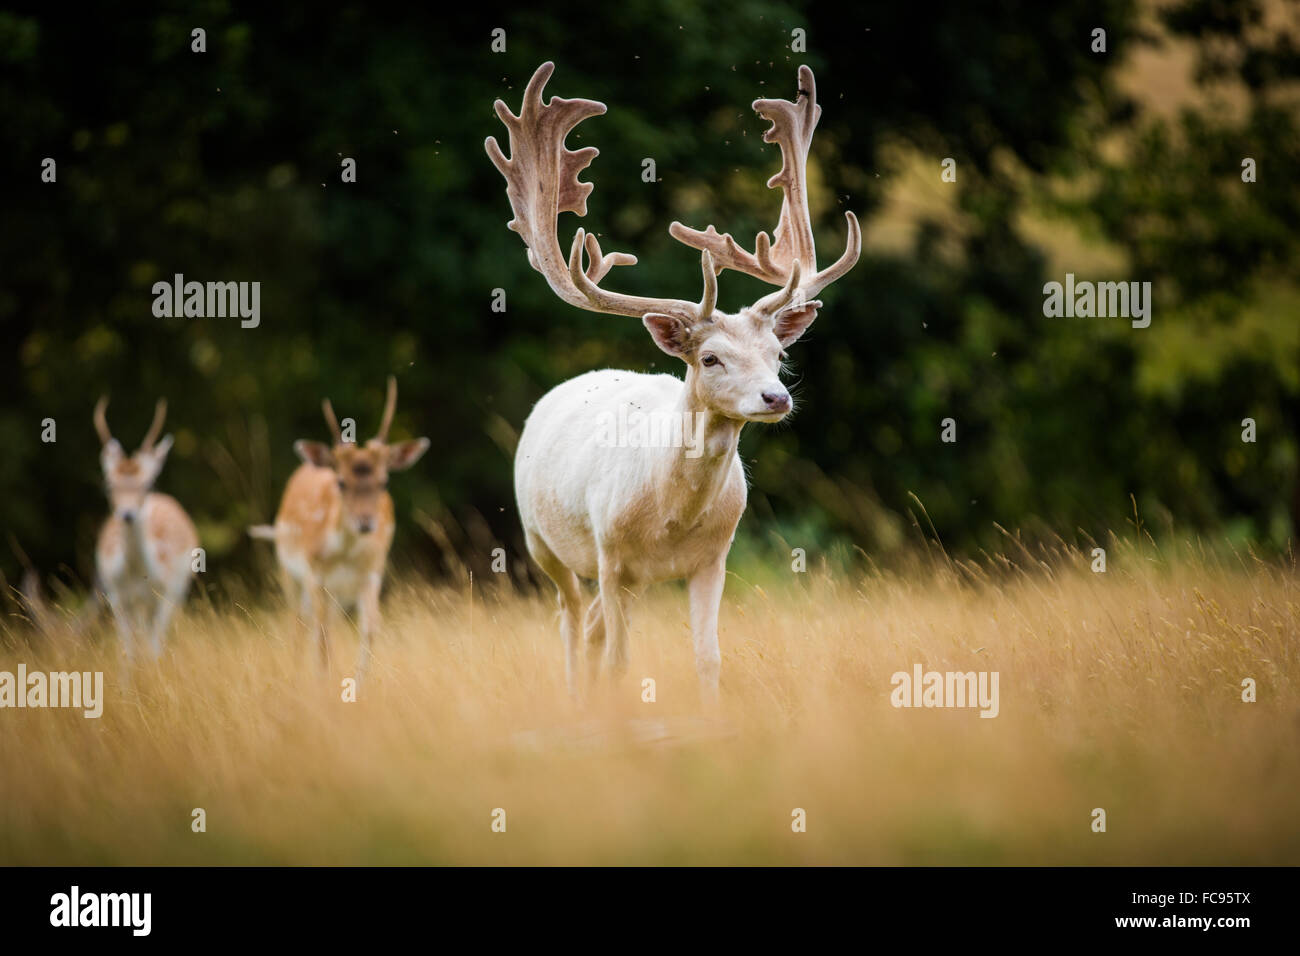 Deer, Royaume-Uni, Europe Banque D'Images